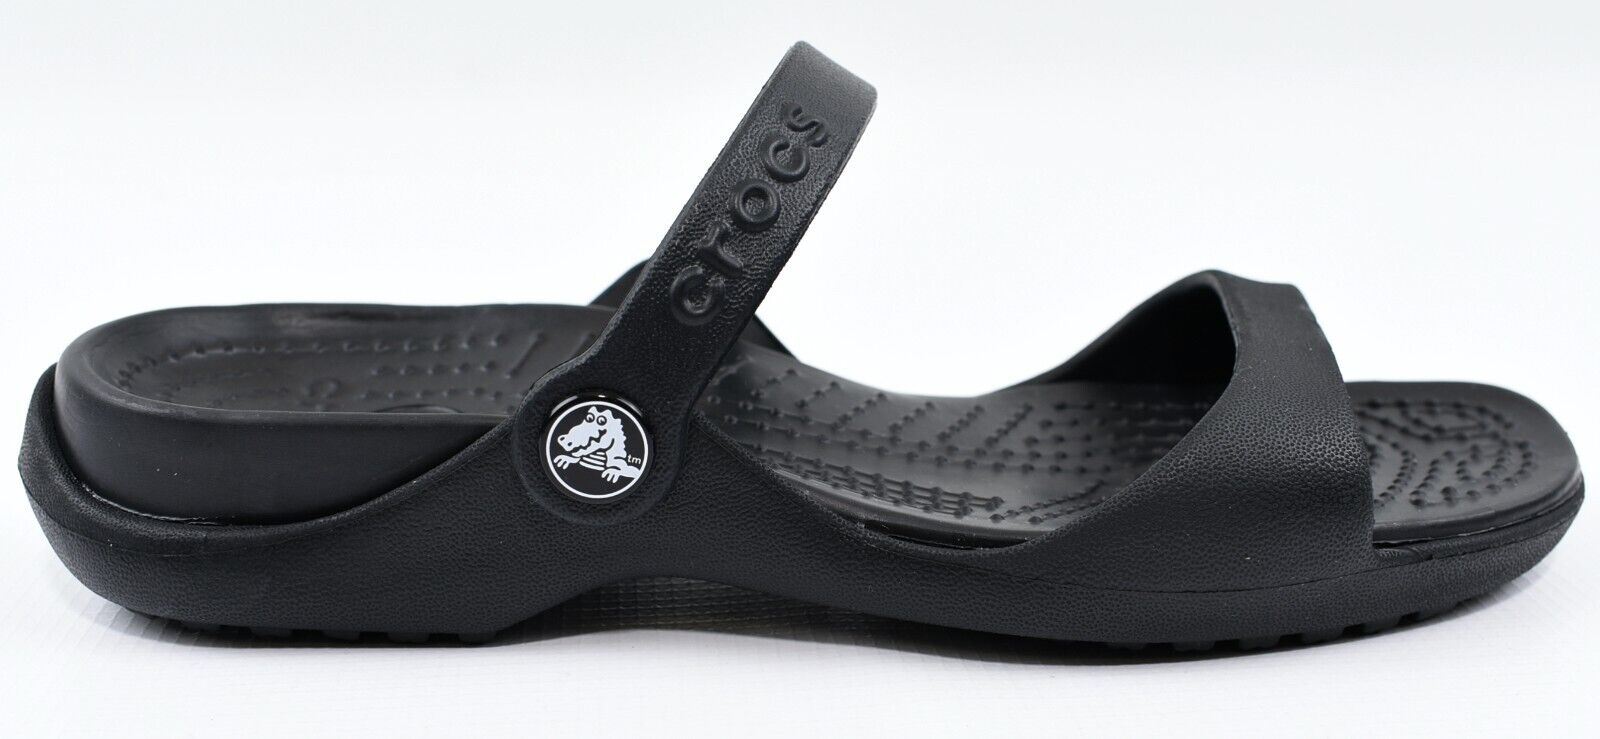 CROCS Women's CLEO Relaxed Fit Sandals Sliders, Black, size UK 3/UK 4 EU 36-37